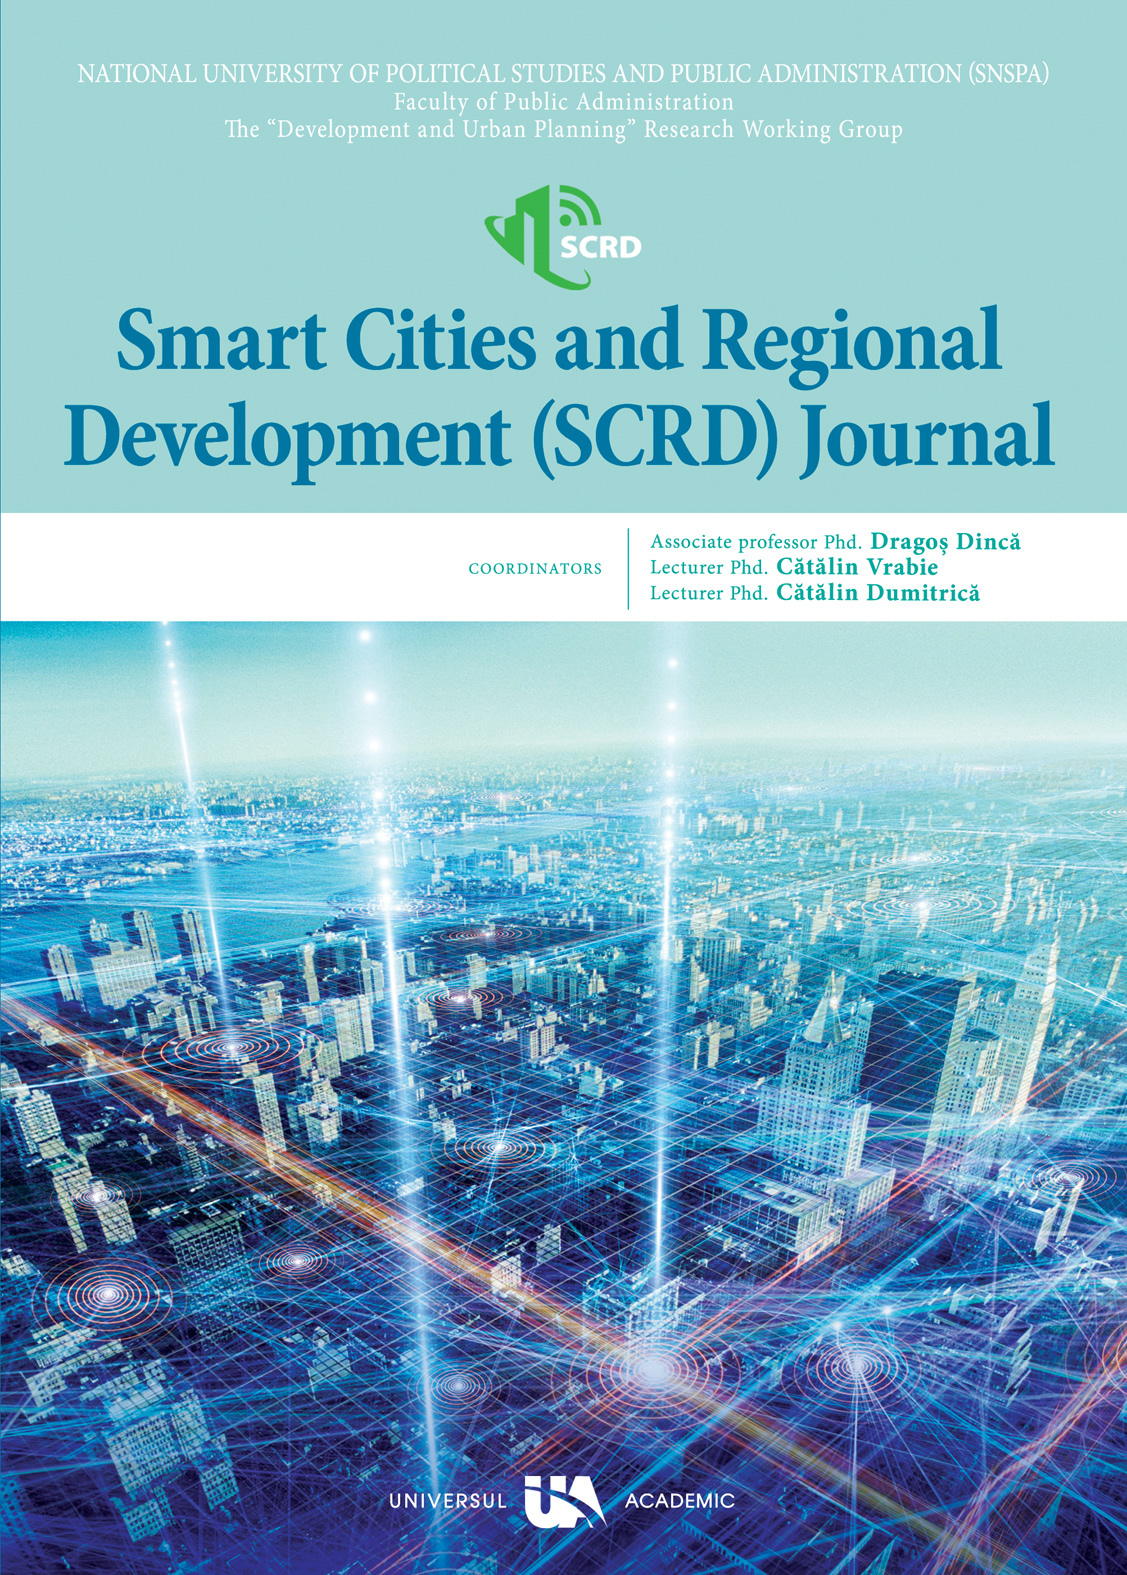 Digitalization and smartening sustainable city development: